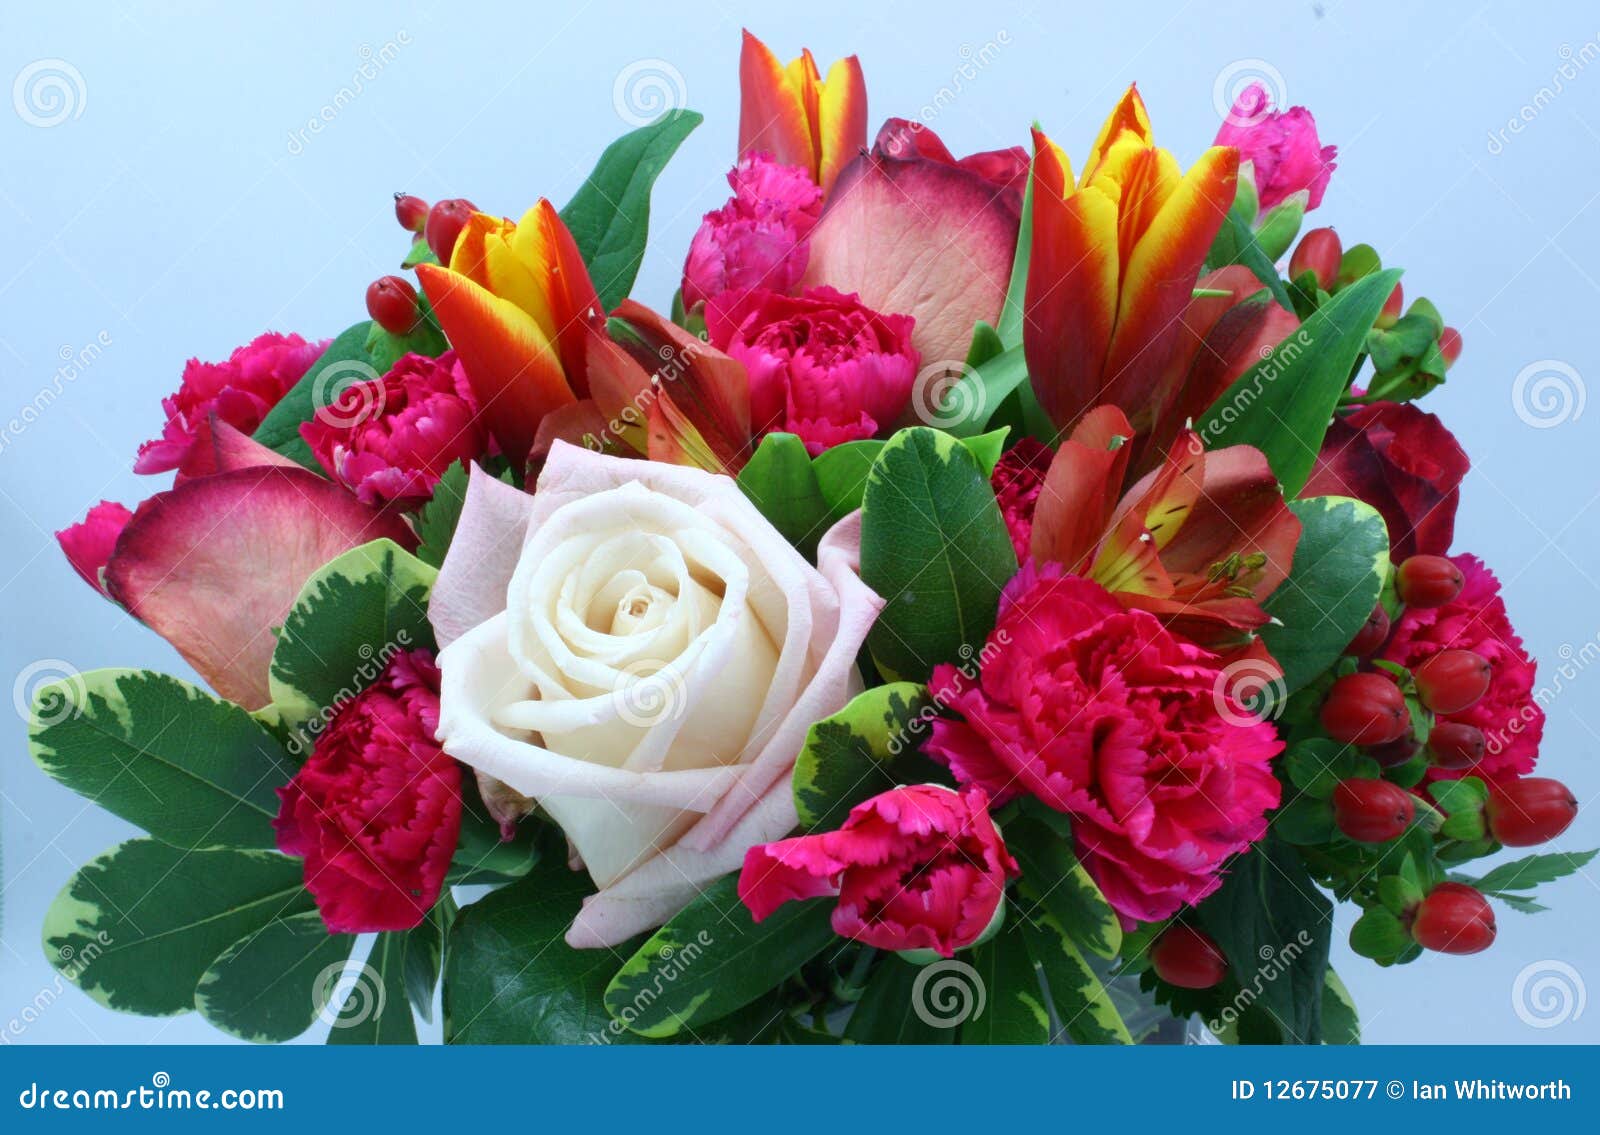 397,020 Flower Arrangement Stock Photos - Free & Royalty-Free ...